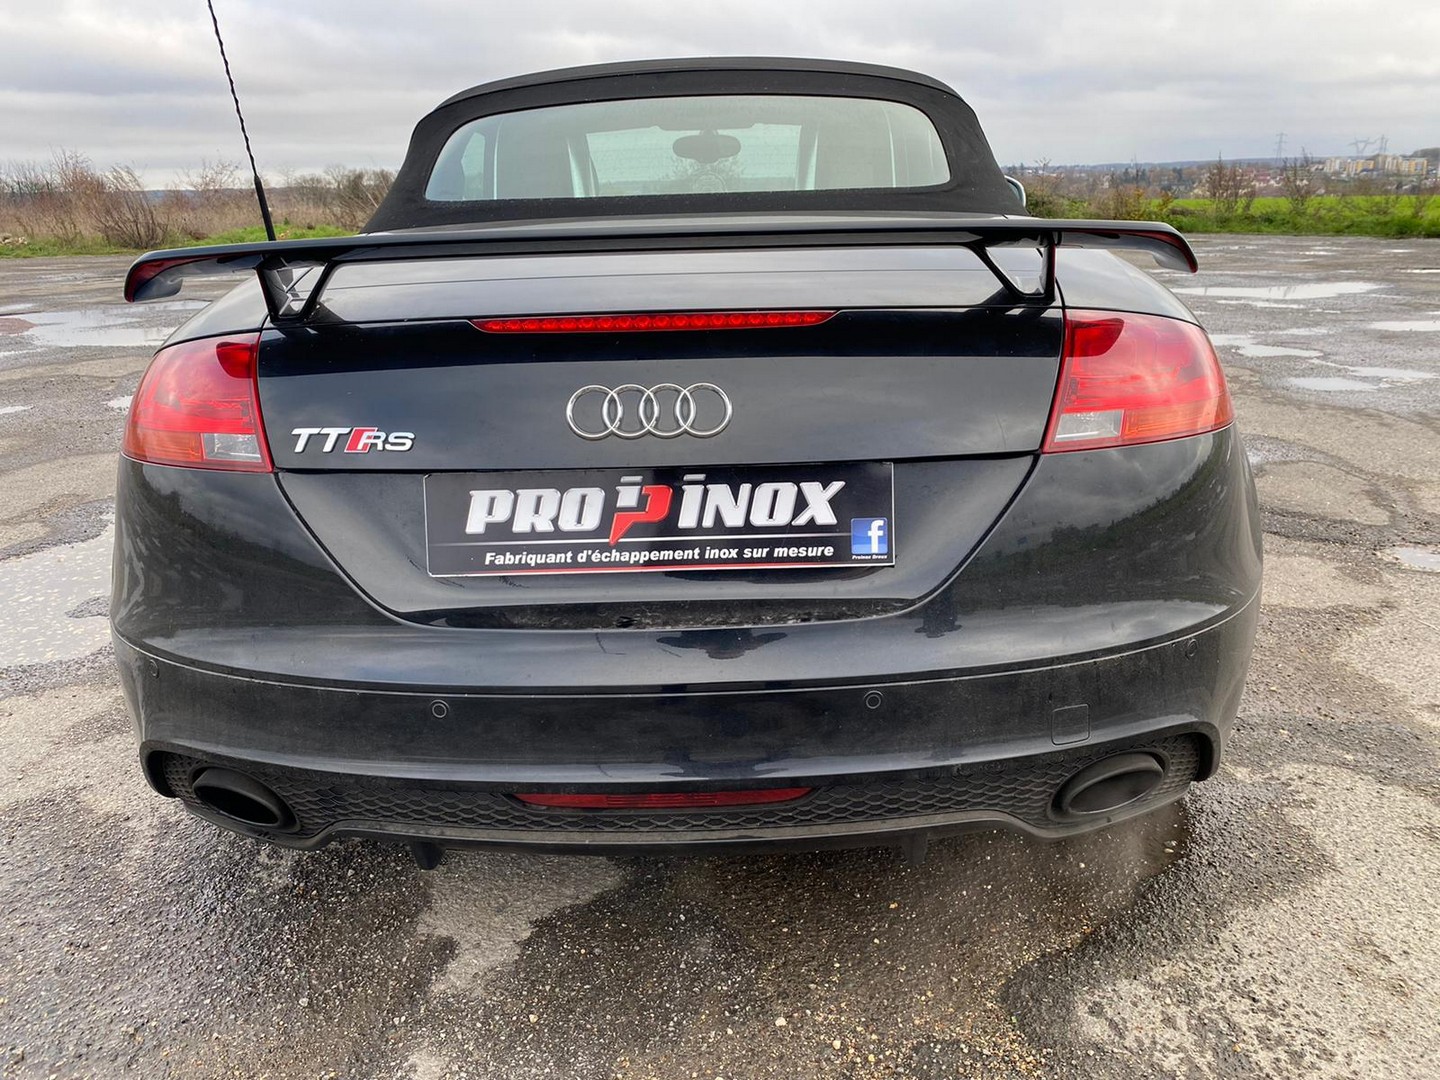 Proinox28 - Échappement inox Audi TT RS